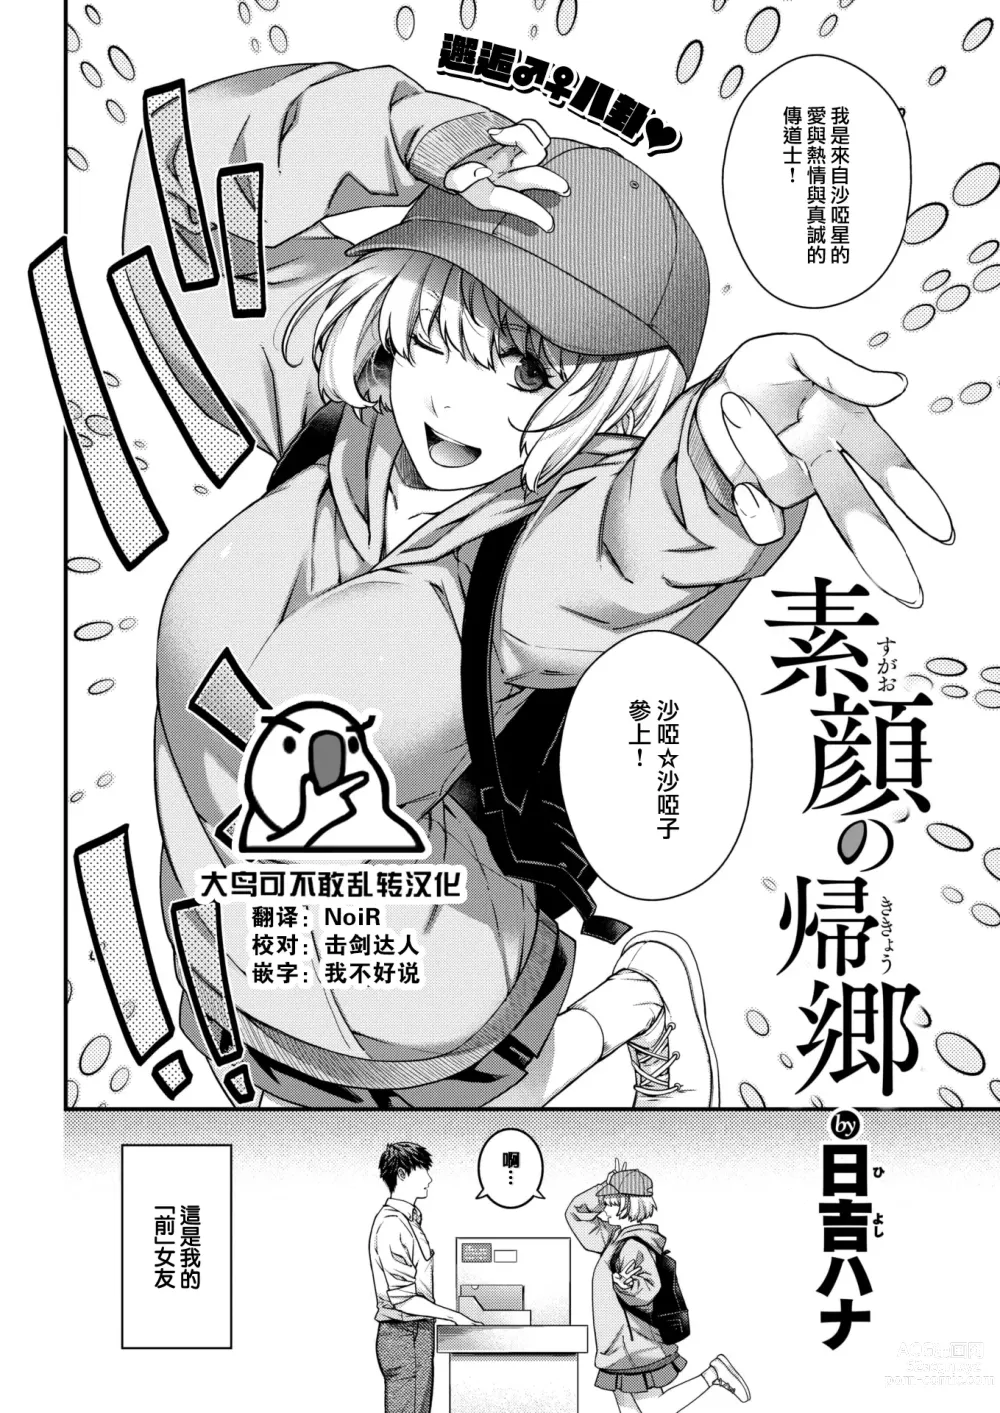 Page 1 of manga Sugao no Kikyou